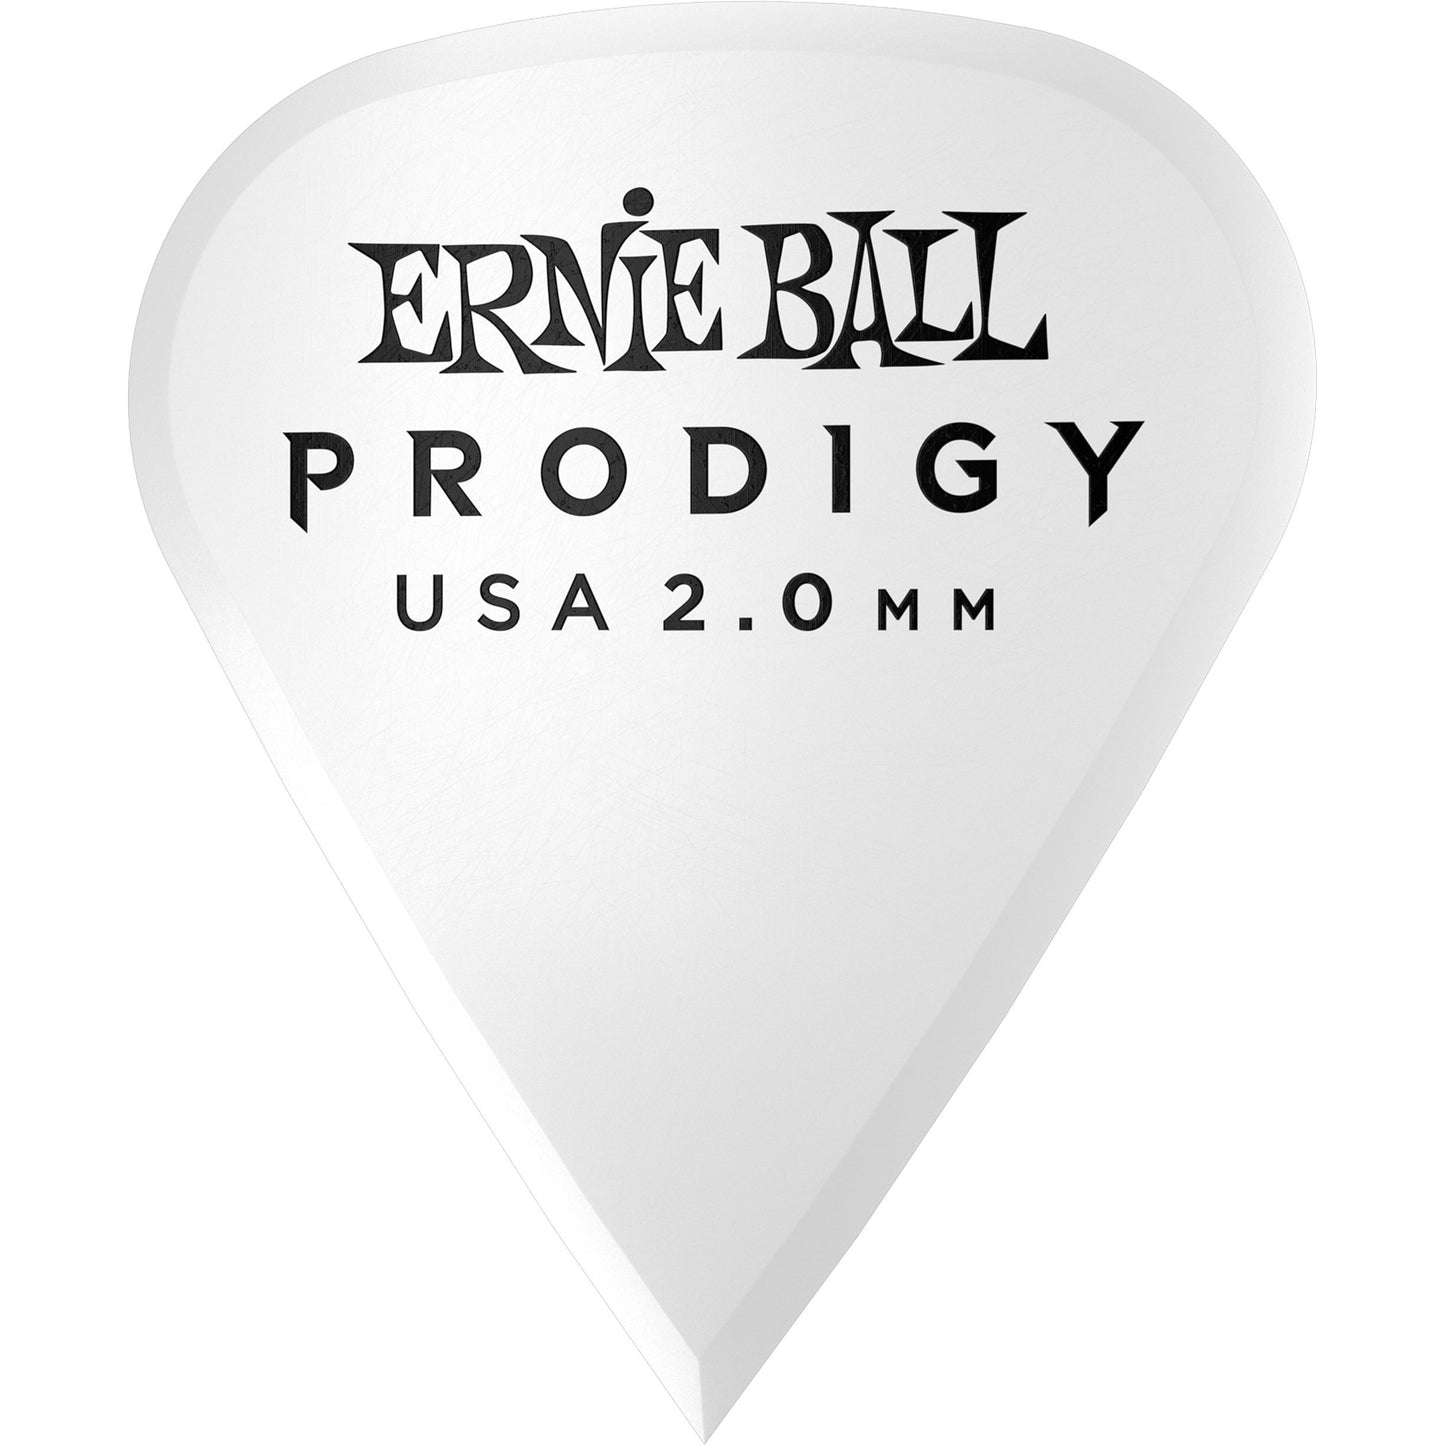 Ernie Ball Prodigy Sharp Guitar Picks (6-Pack), White, 2.0mm